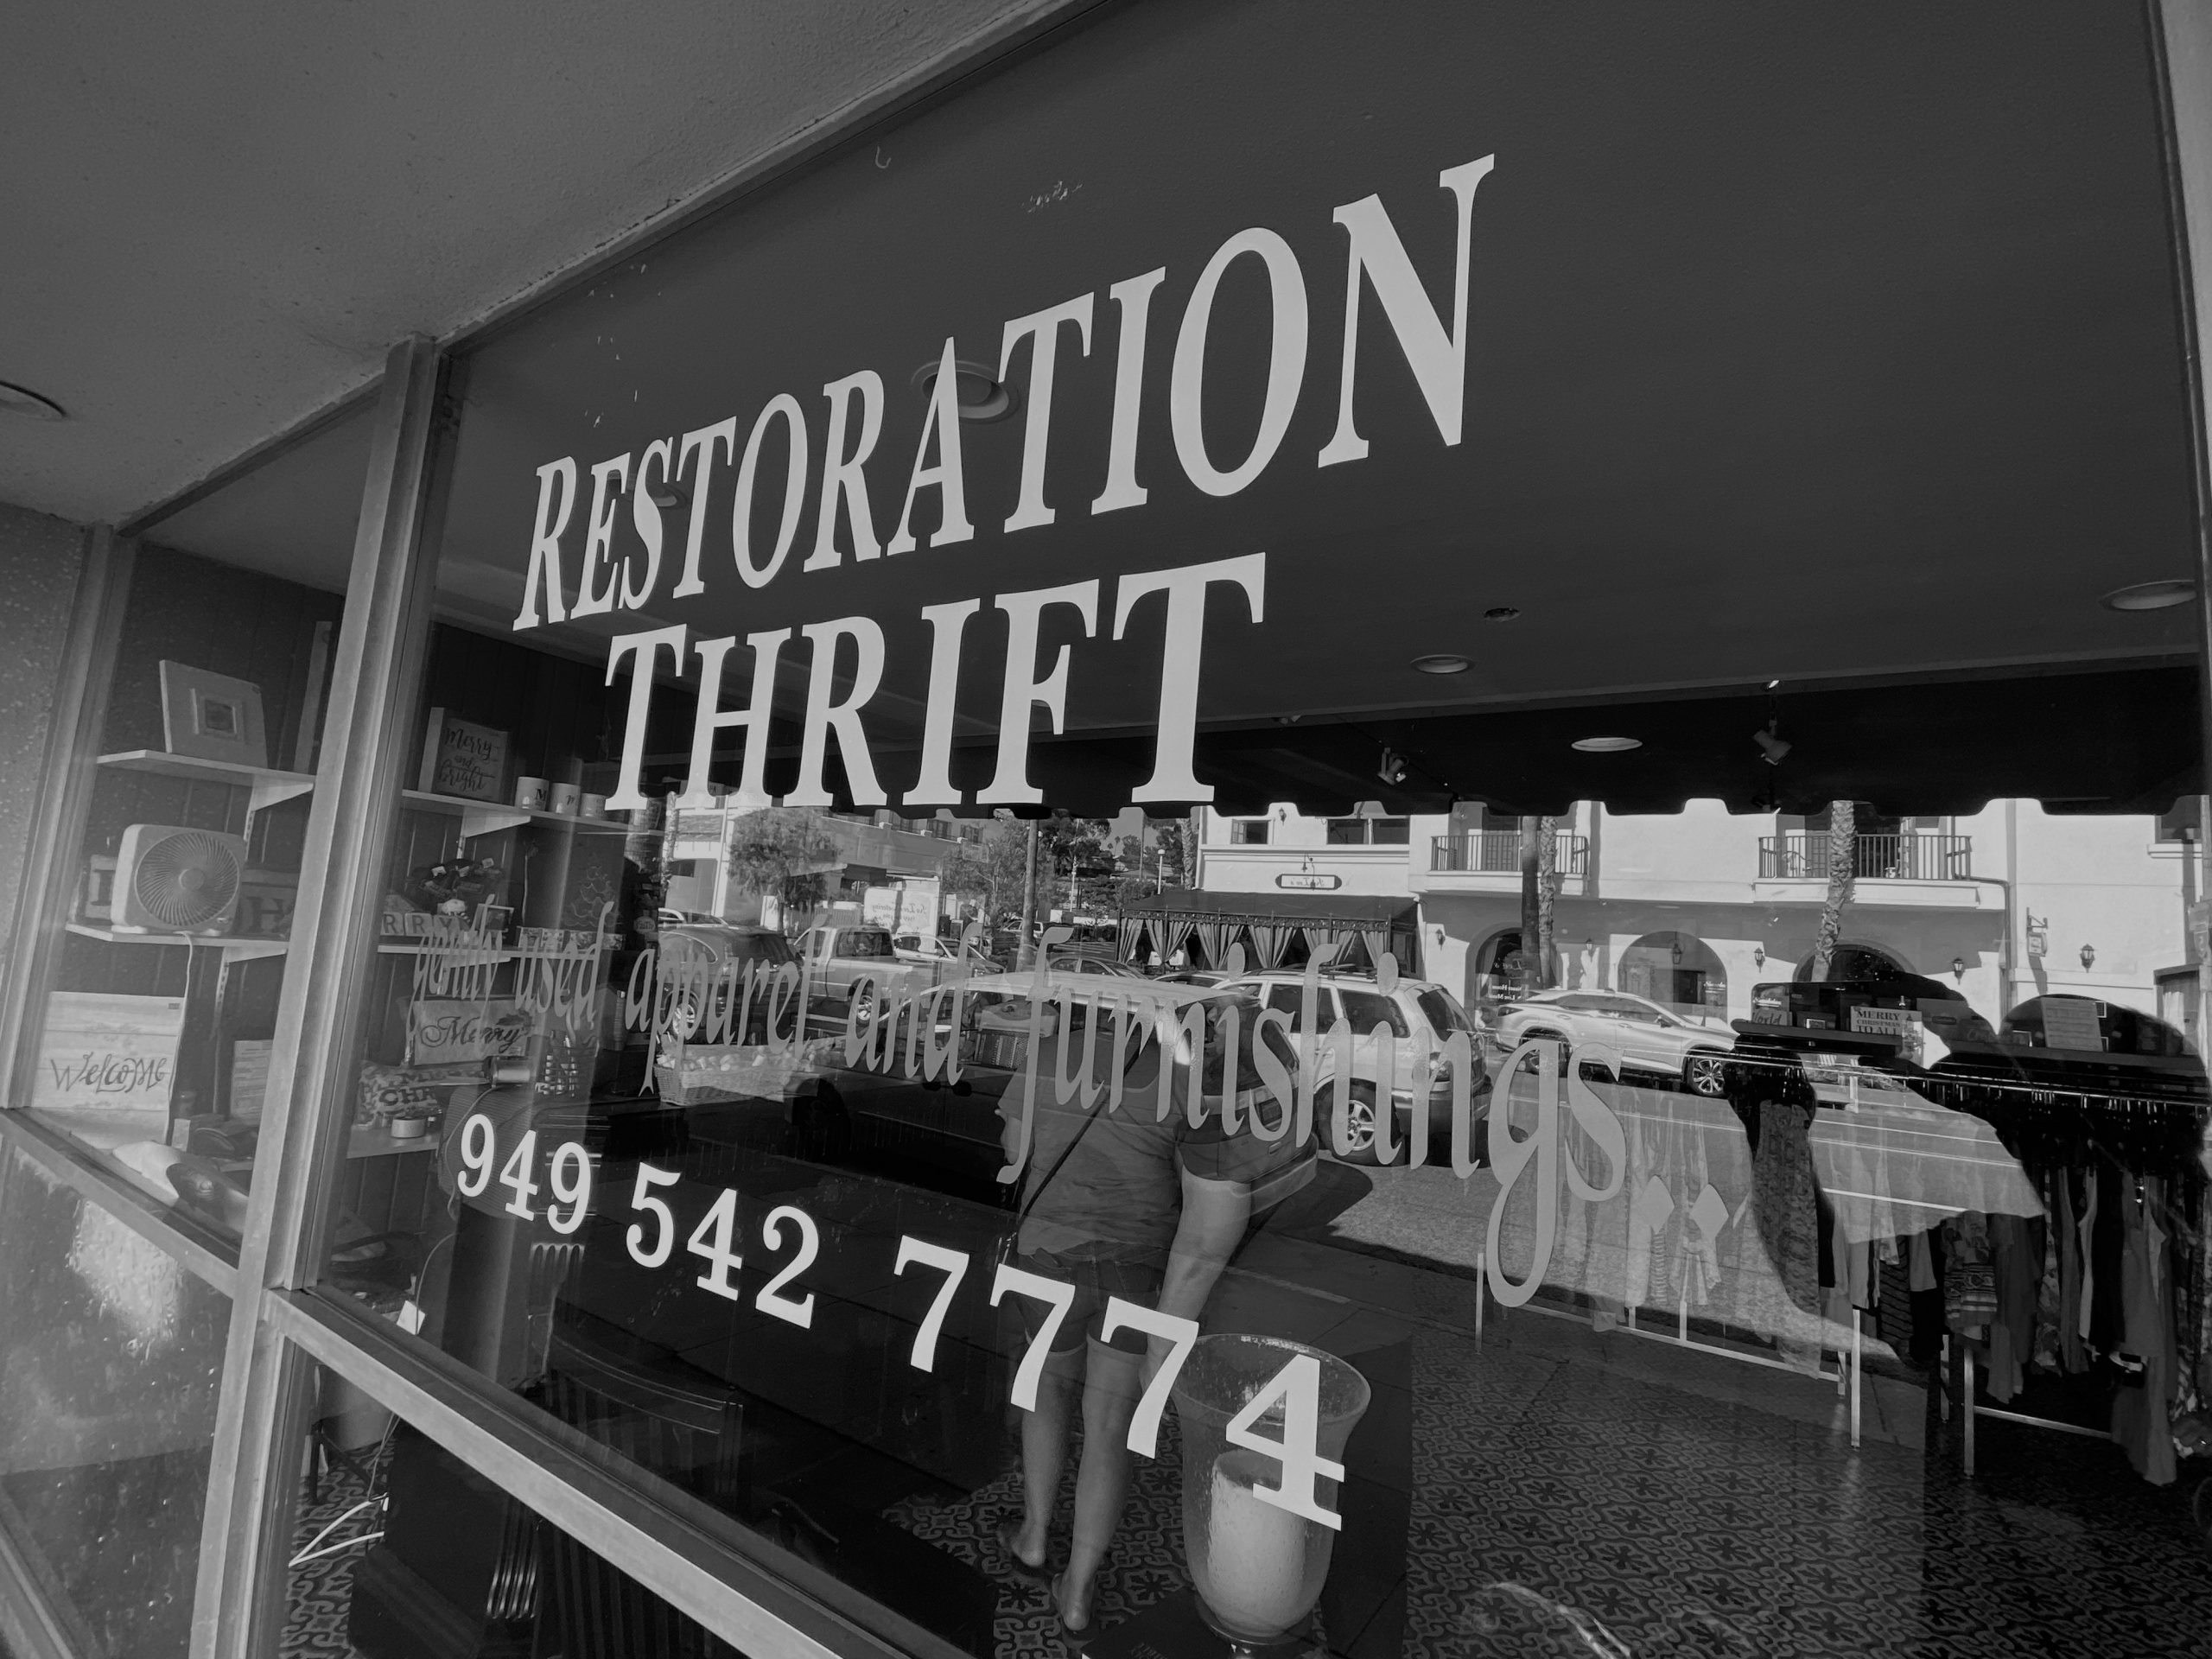 Restoration Thrift Store Front Image